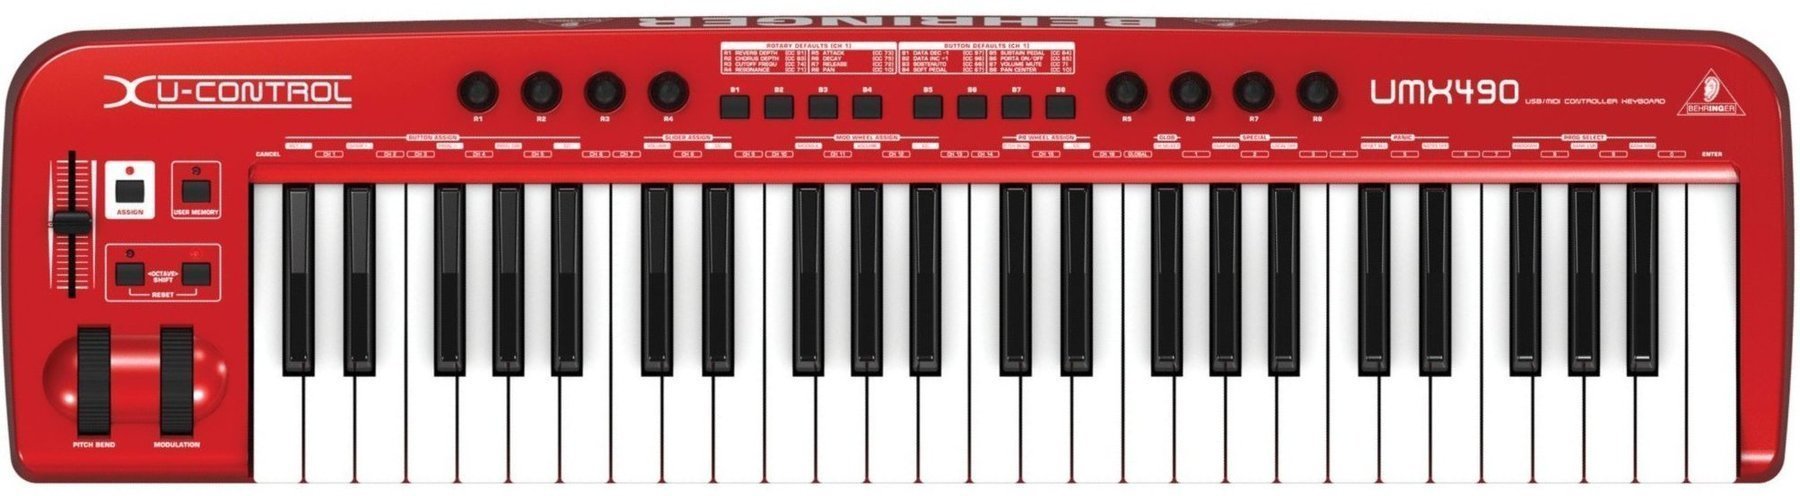 MIDI-Keyboard Behringer UMX 490 U-CONTROL